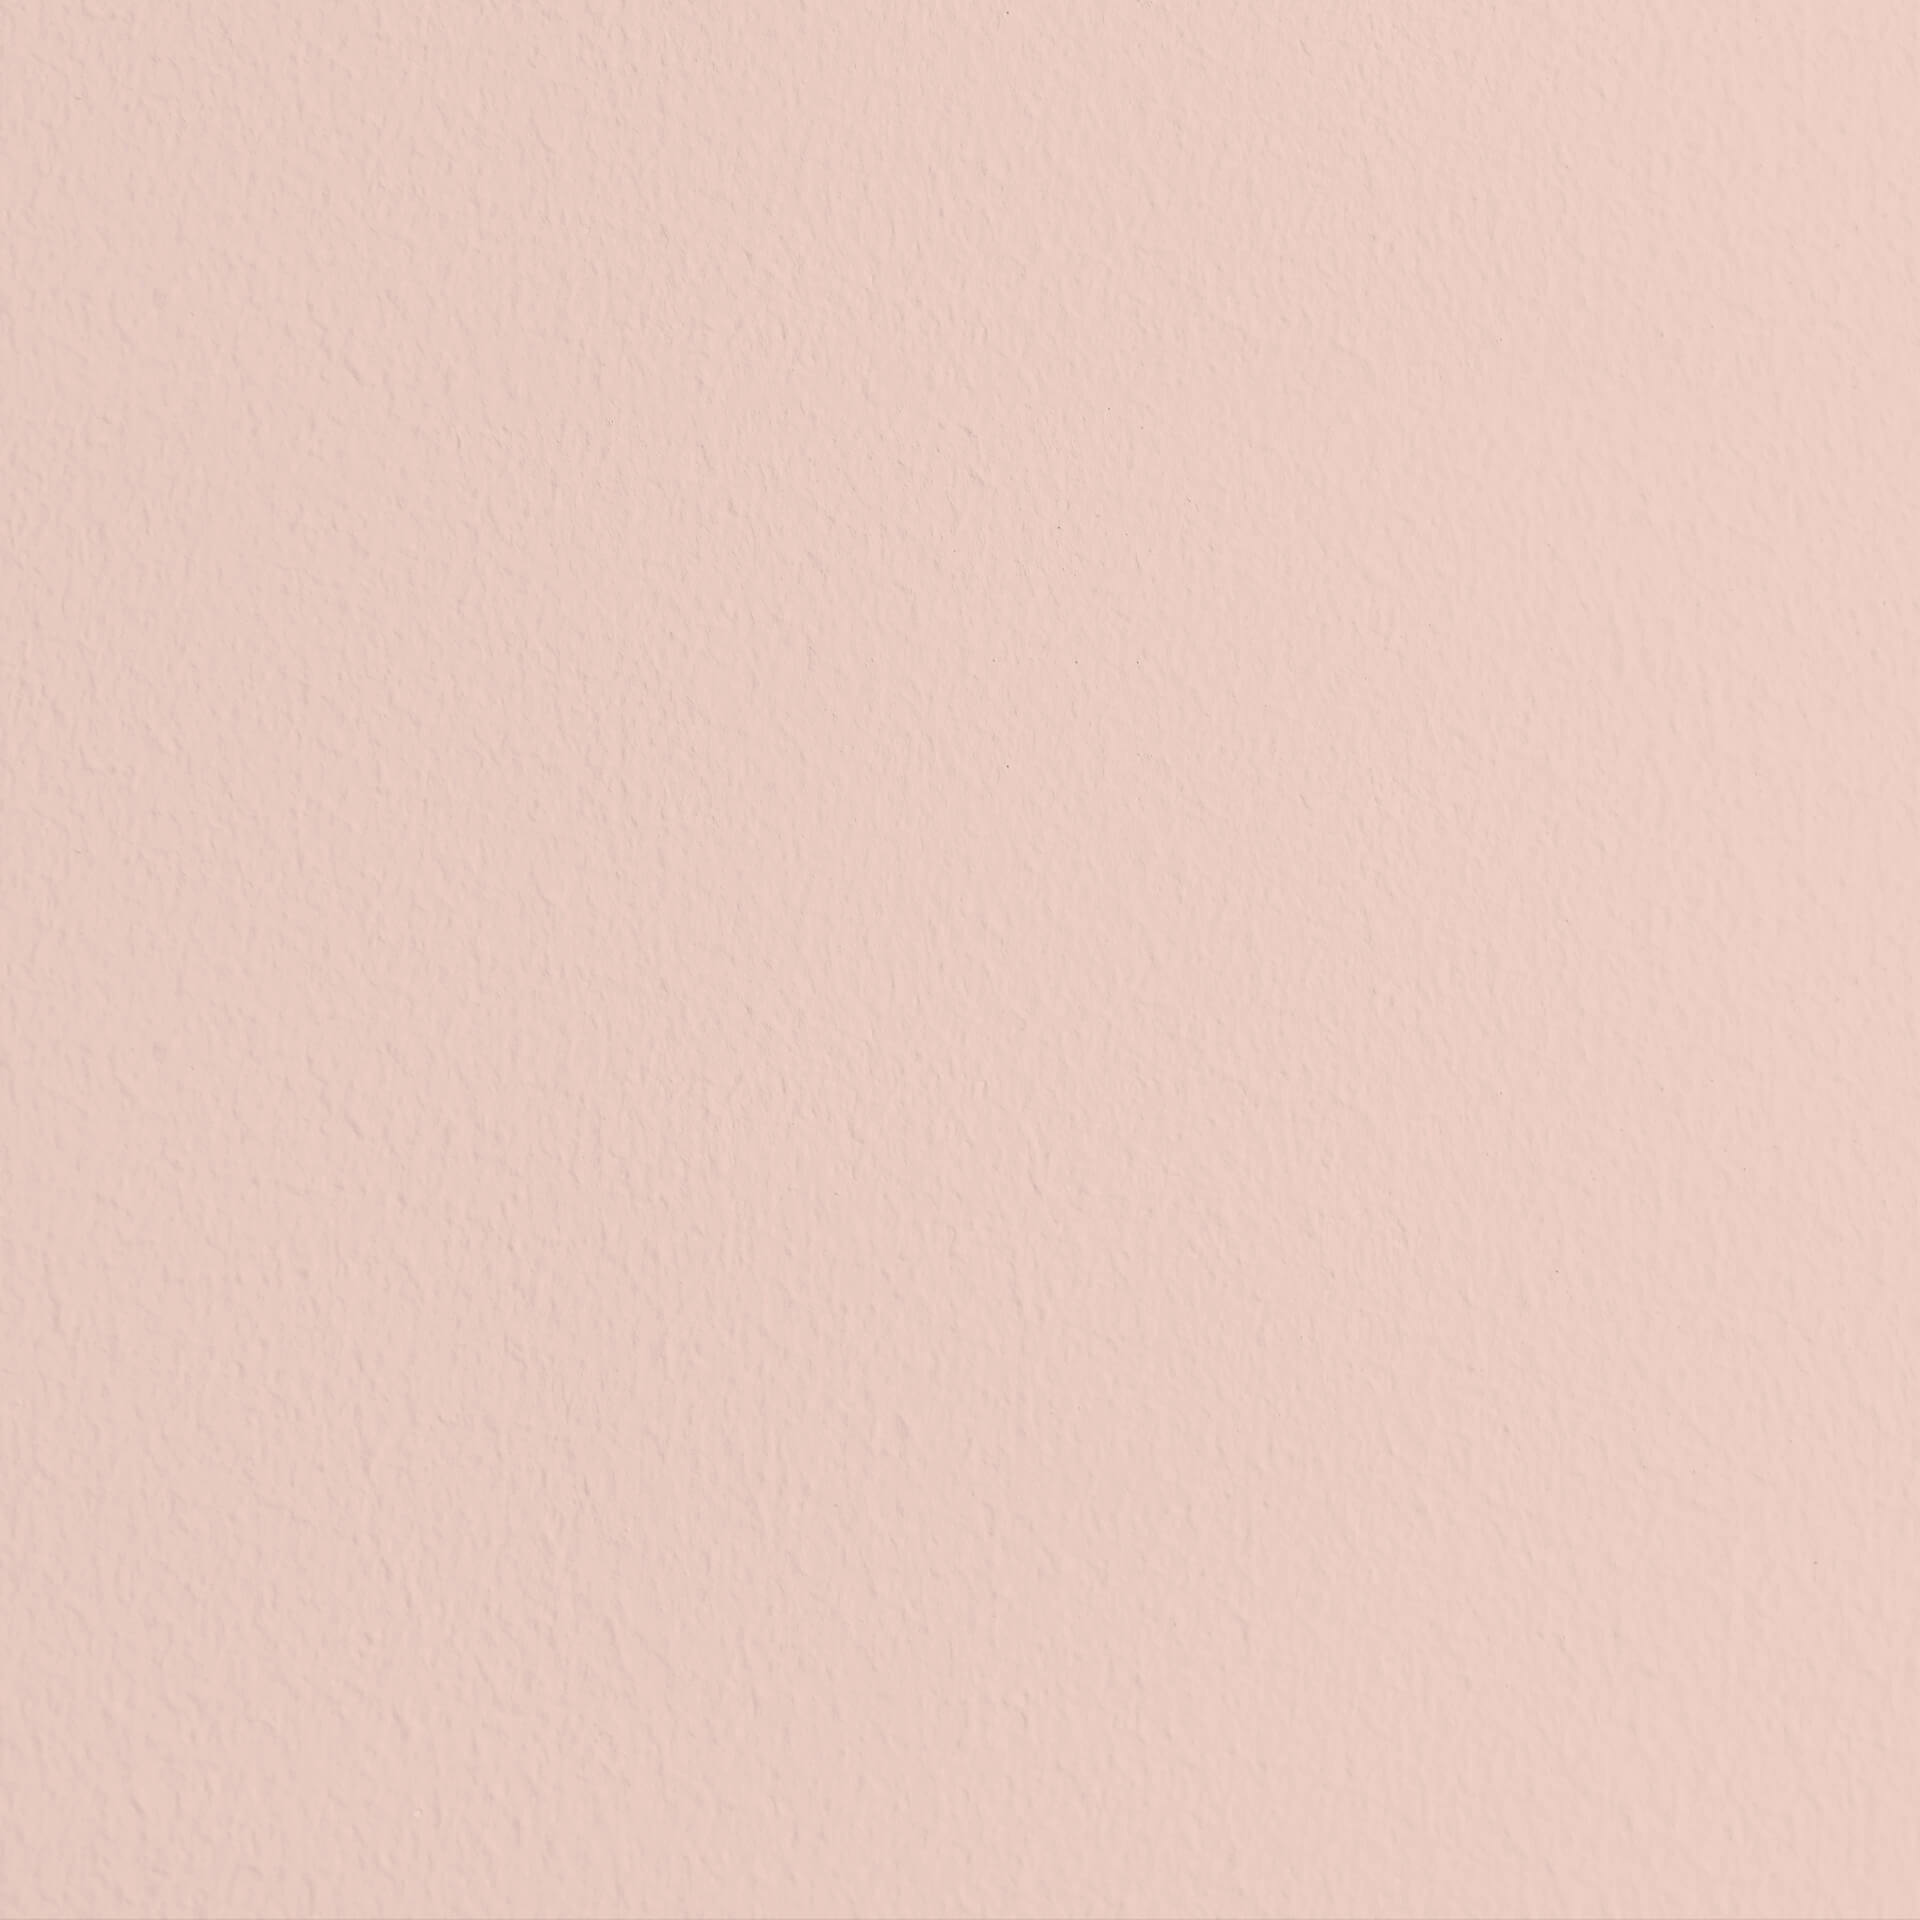 Mylands Gentleman's Pink No. 221 - Marble Matt Emulsion / Wandfarbe, 100ml